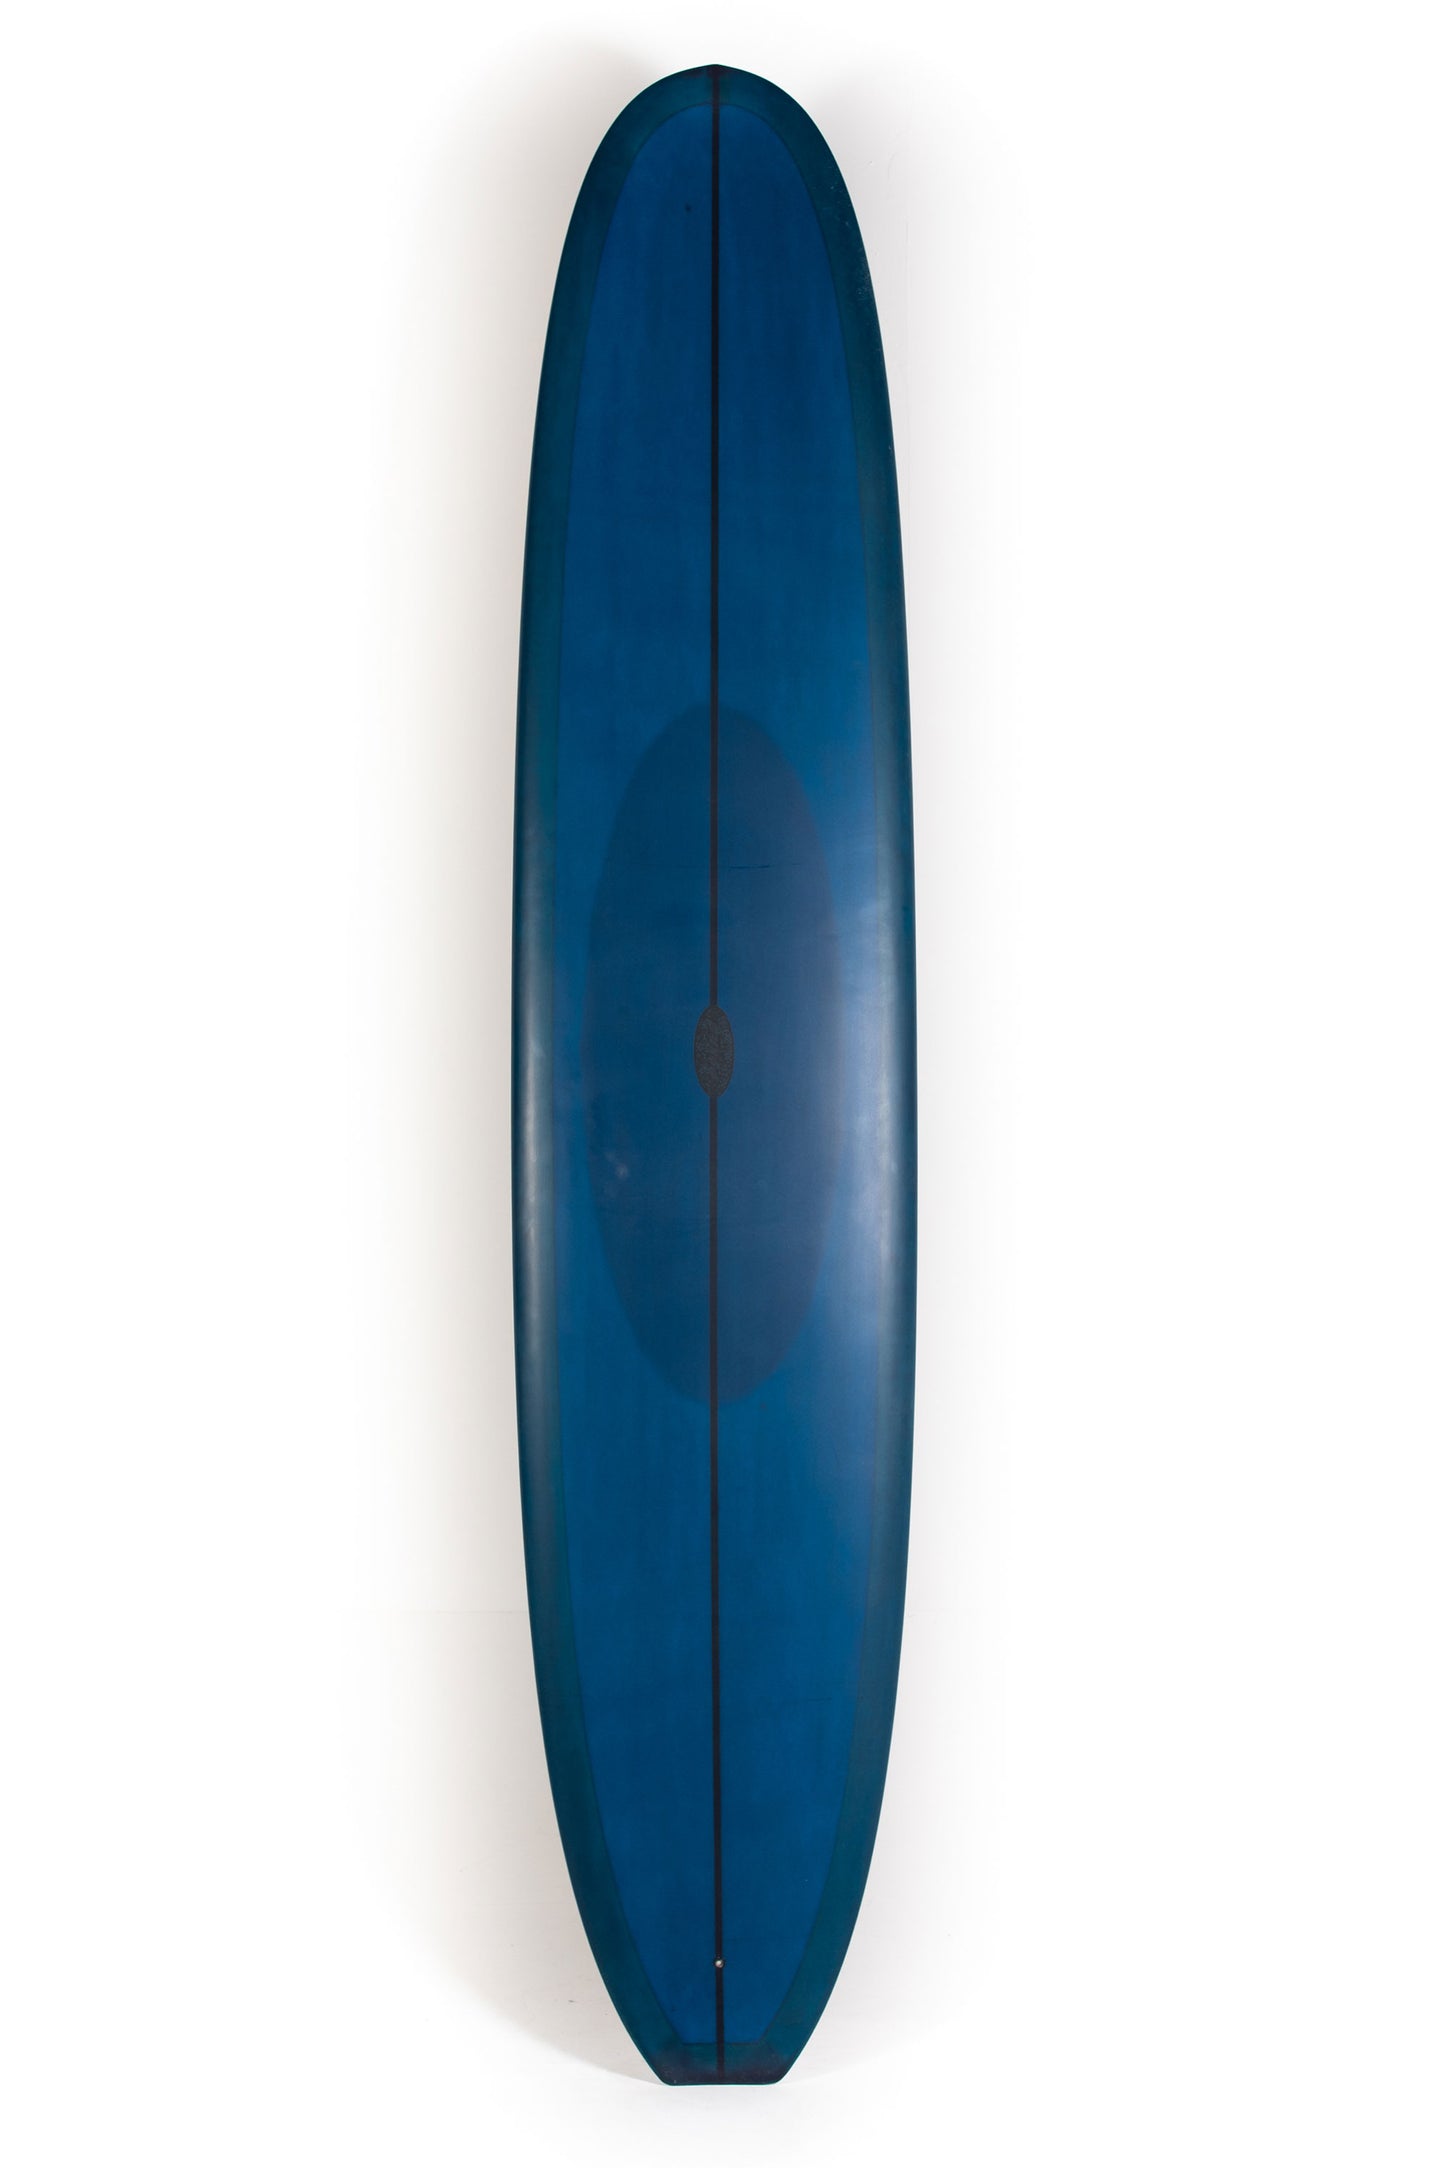 Pukas Surf Shop - Pukas Surfboards - MAYFLOWER by Axel Lorentz -  9'6" x 23 x 3,12 x 80L - AX09727